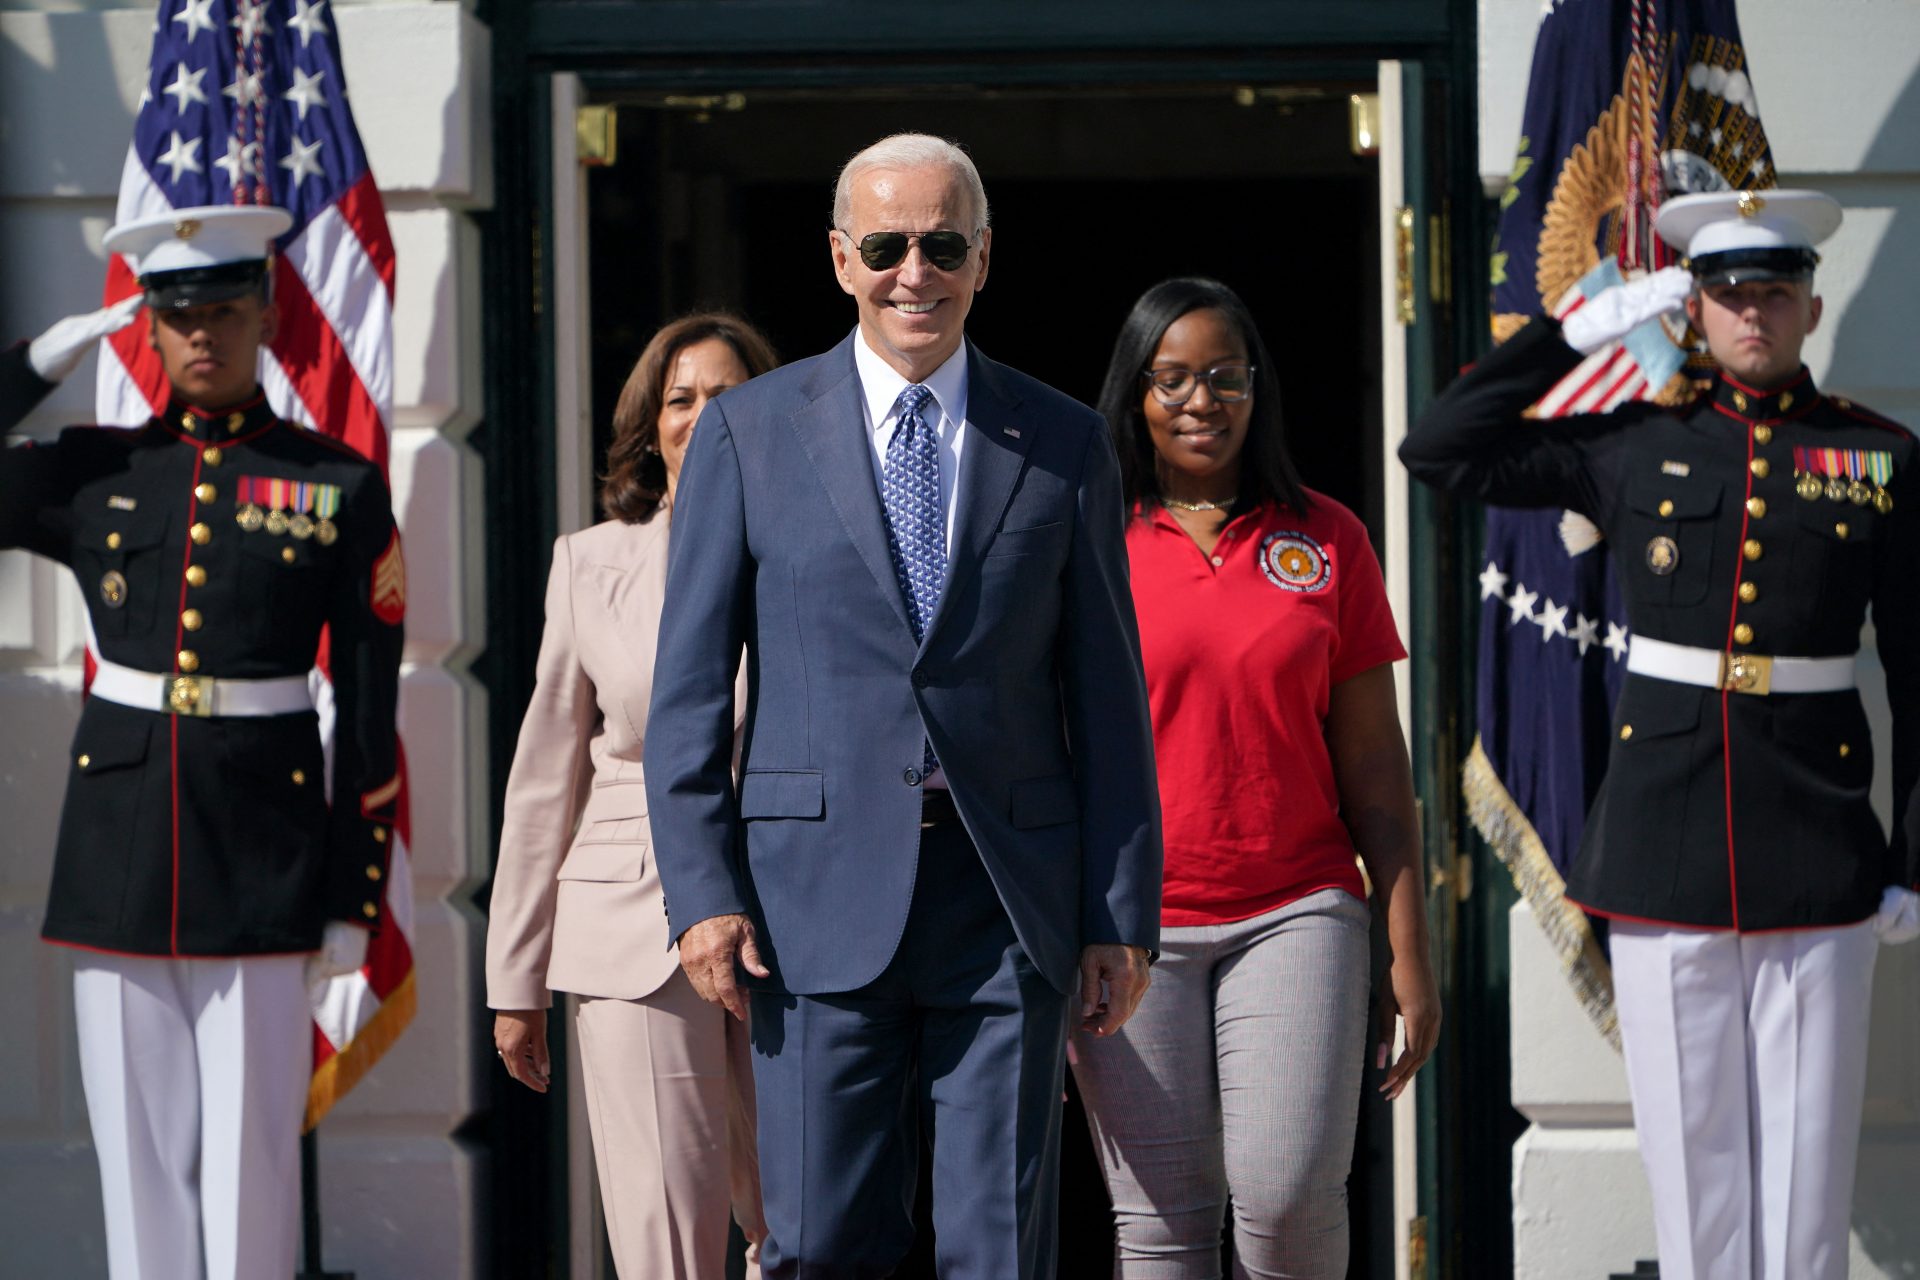 2020 Déjà vu? Biden seems a shoo-in for the Democratic nominee 